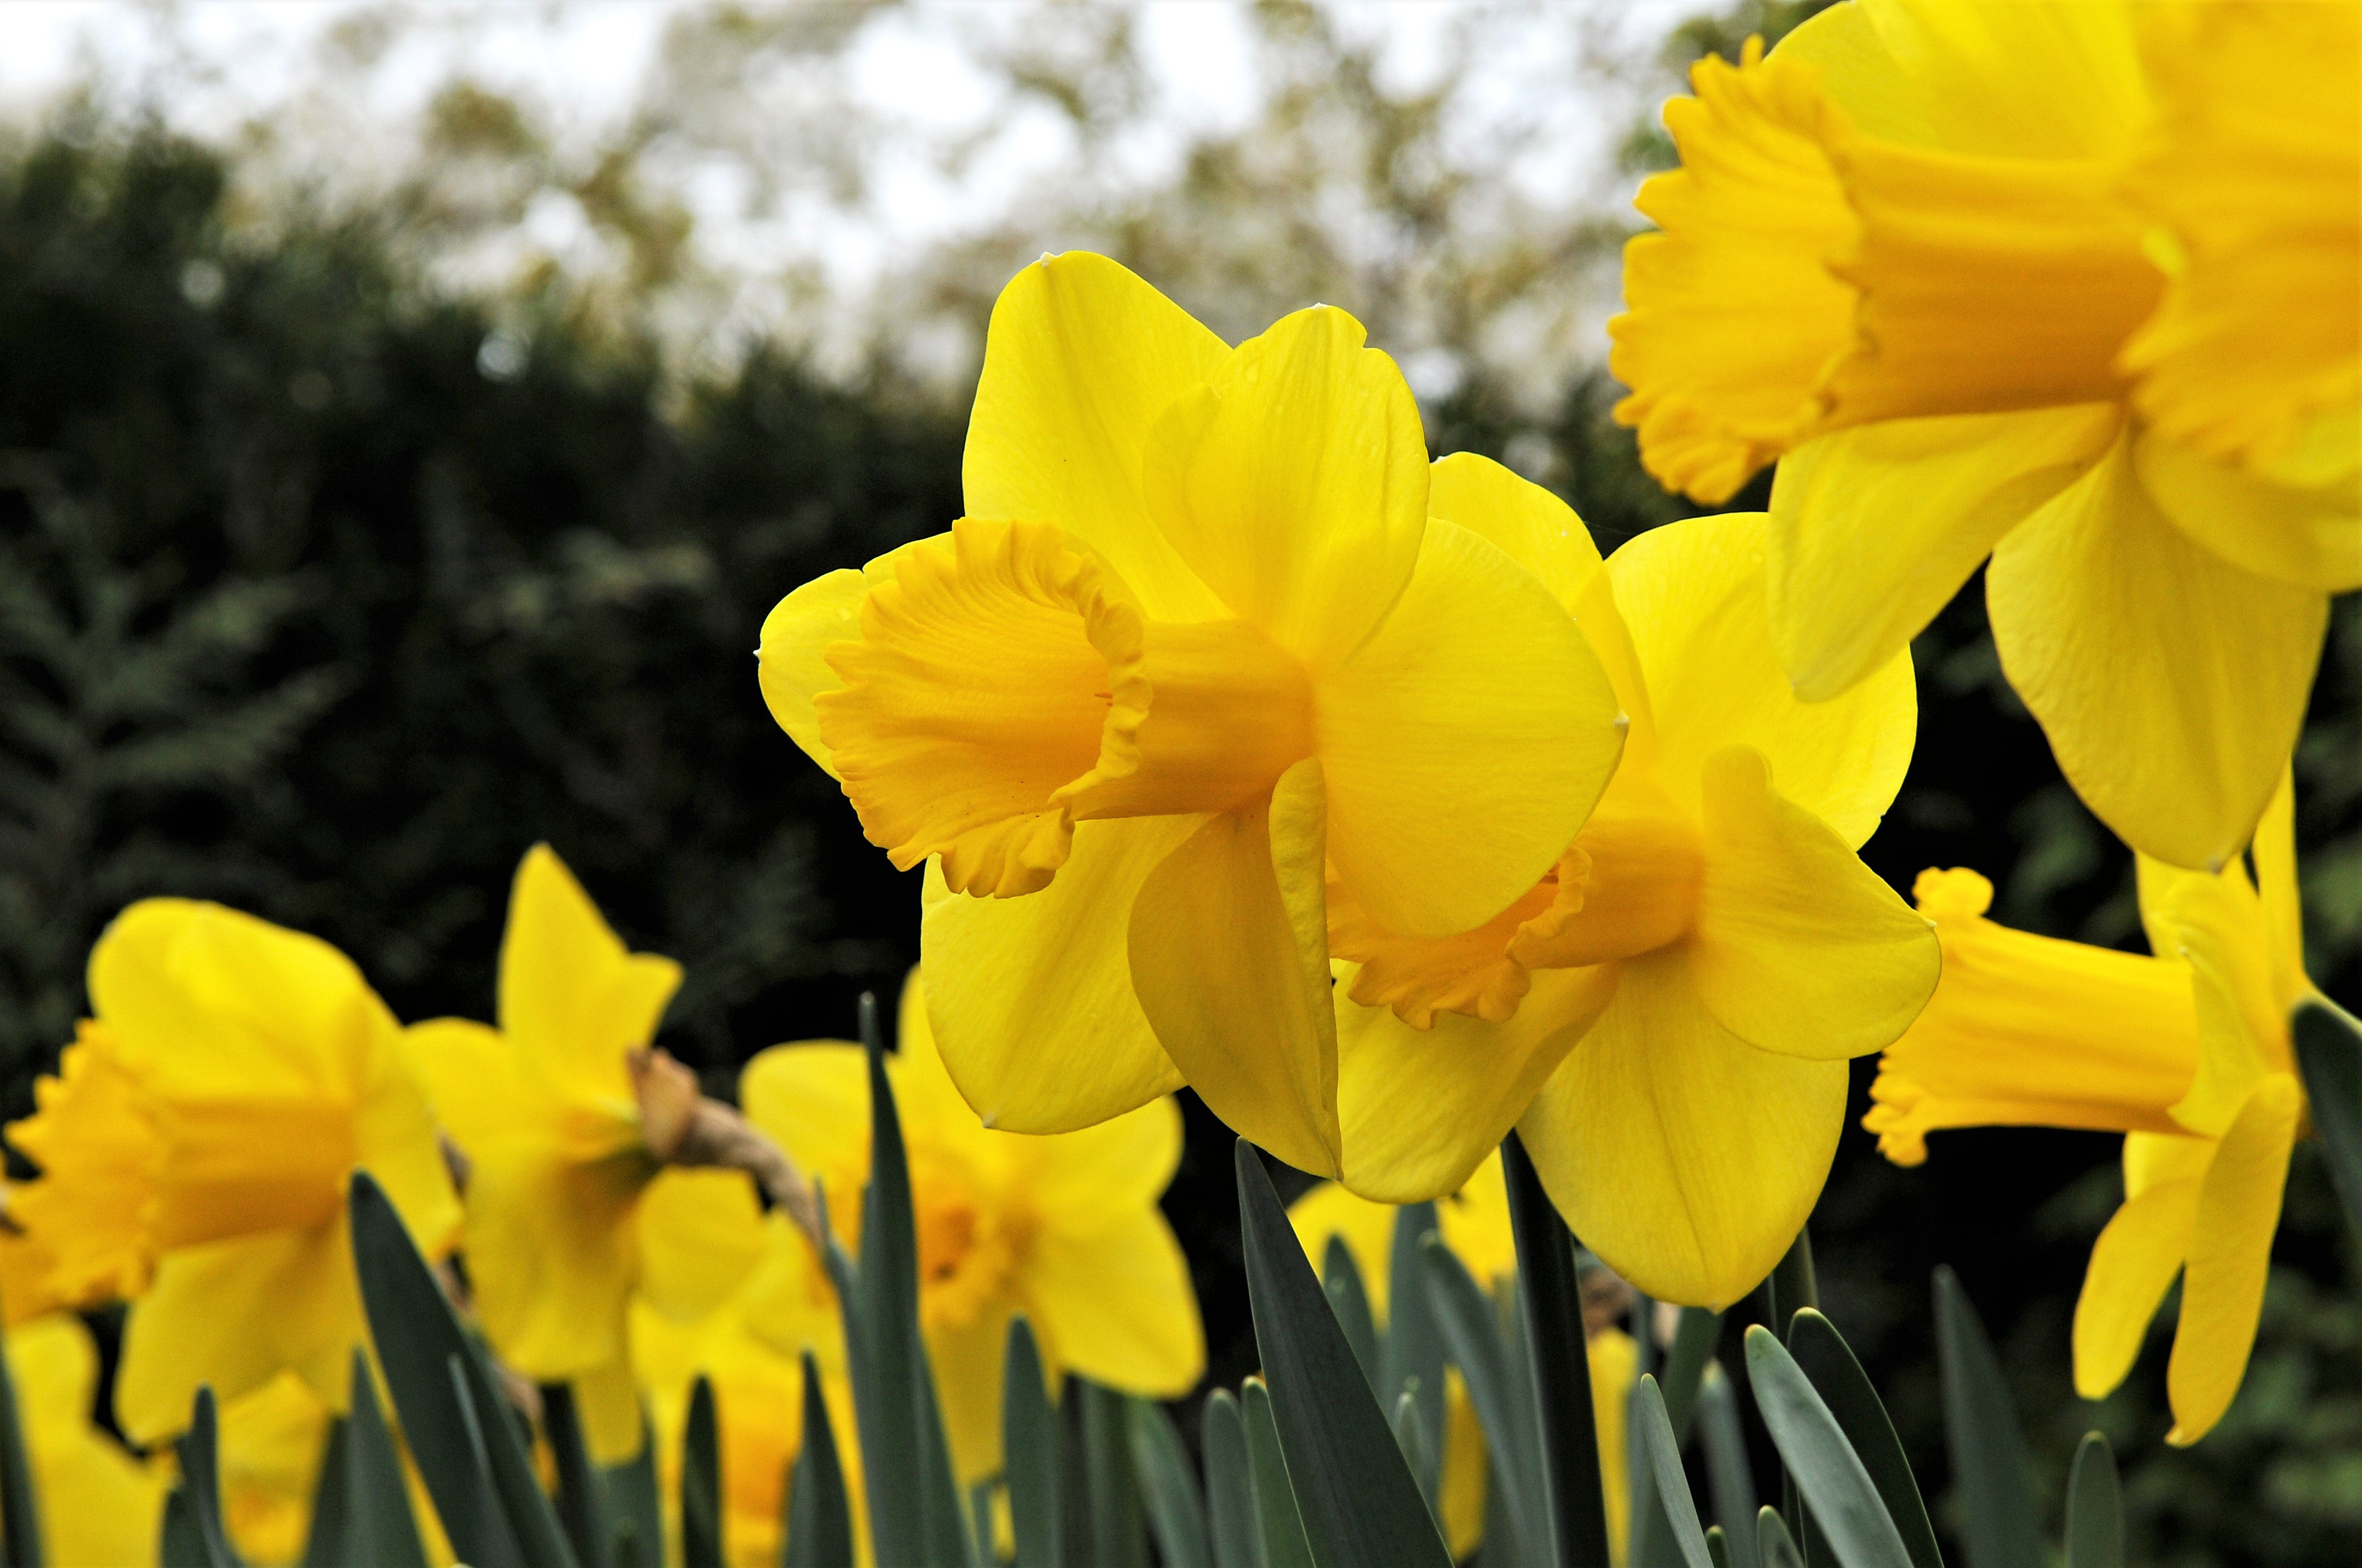 Enchanting Carlton daffodil, vibrant yellow petals announce the season.